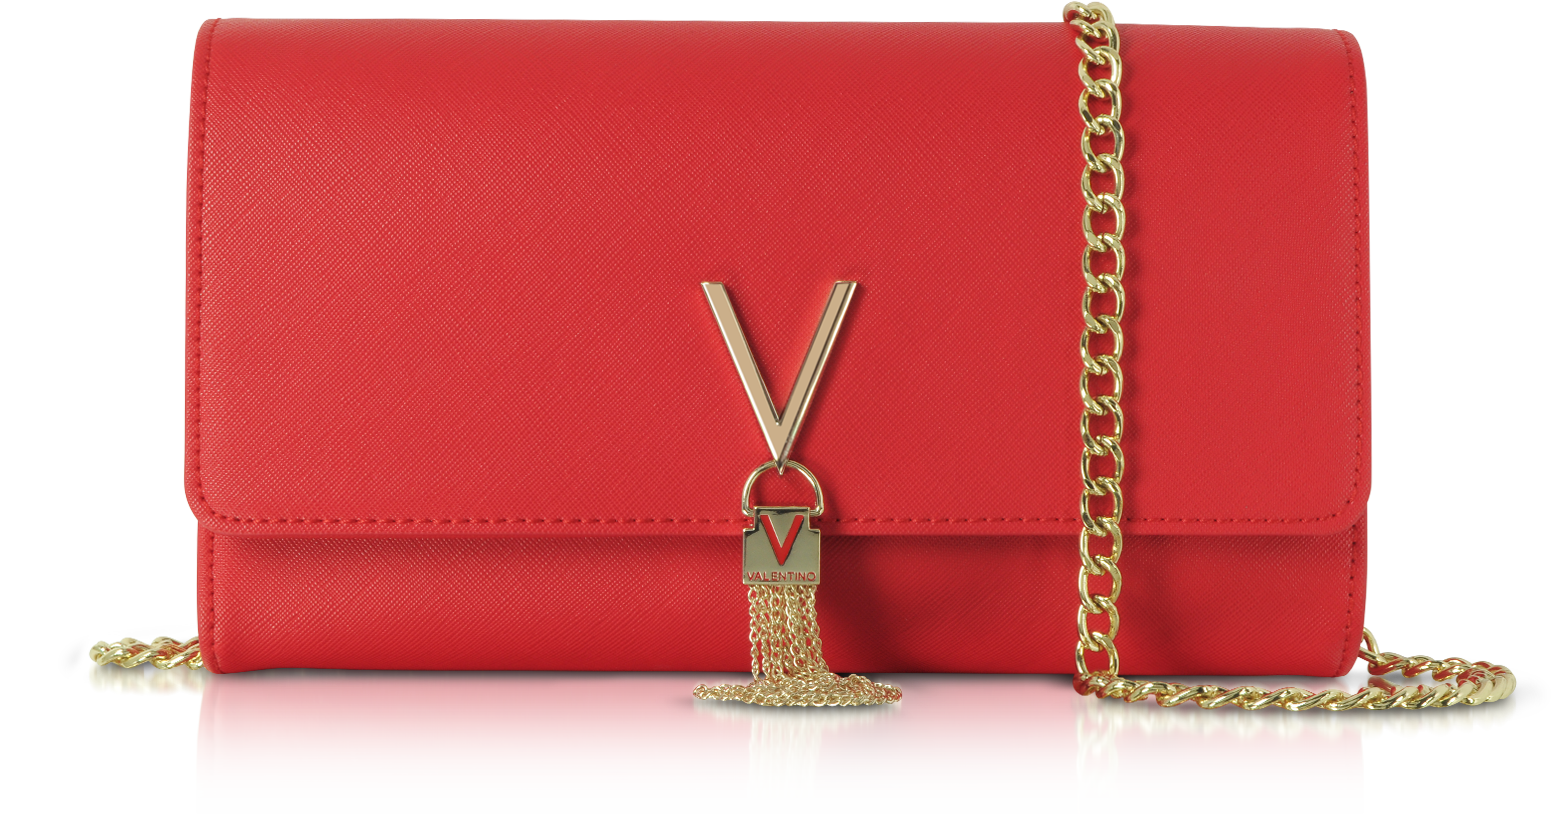 Valentino by Mario Valentino Red Divina Saffiano Shoulder Bag at